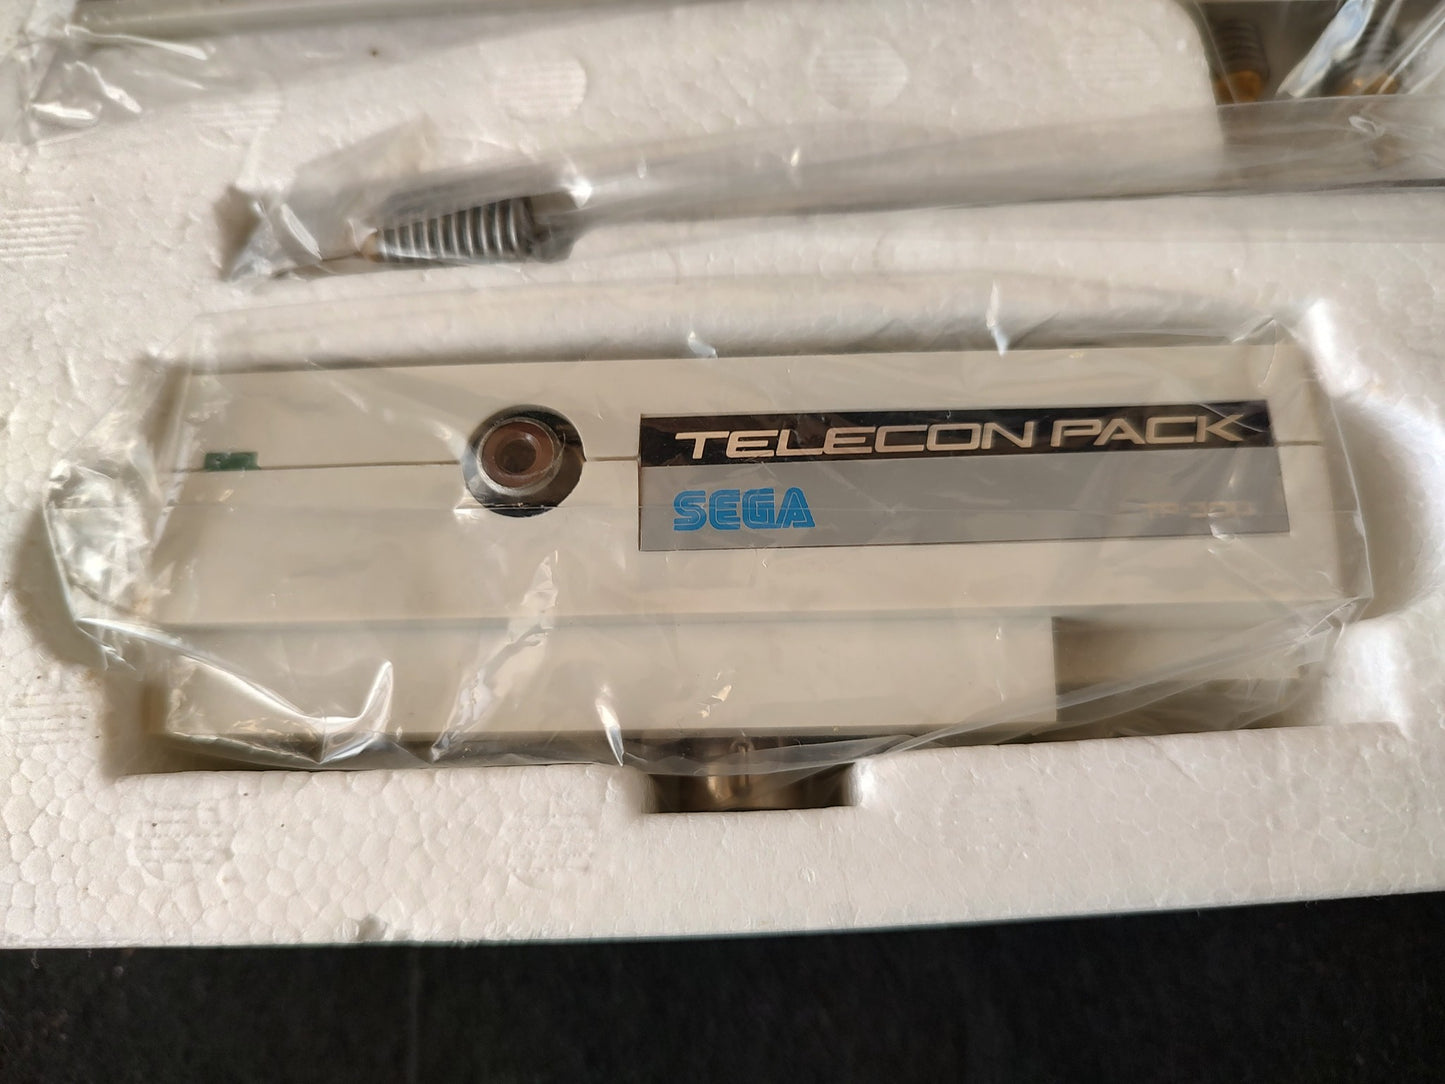 SEGA MARK 3 TELECON PACK (Sega Master System) ,w/Manual, Box No-tested-g0125-